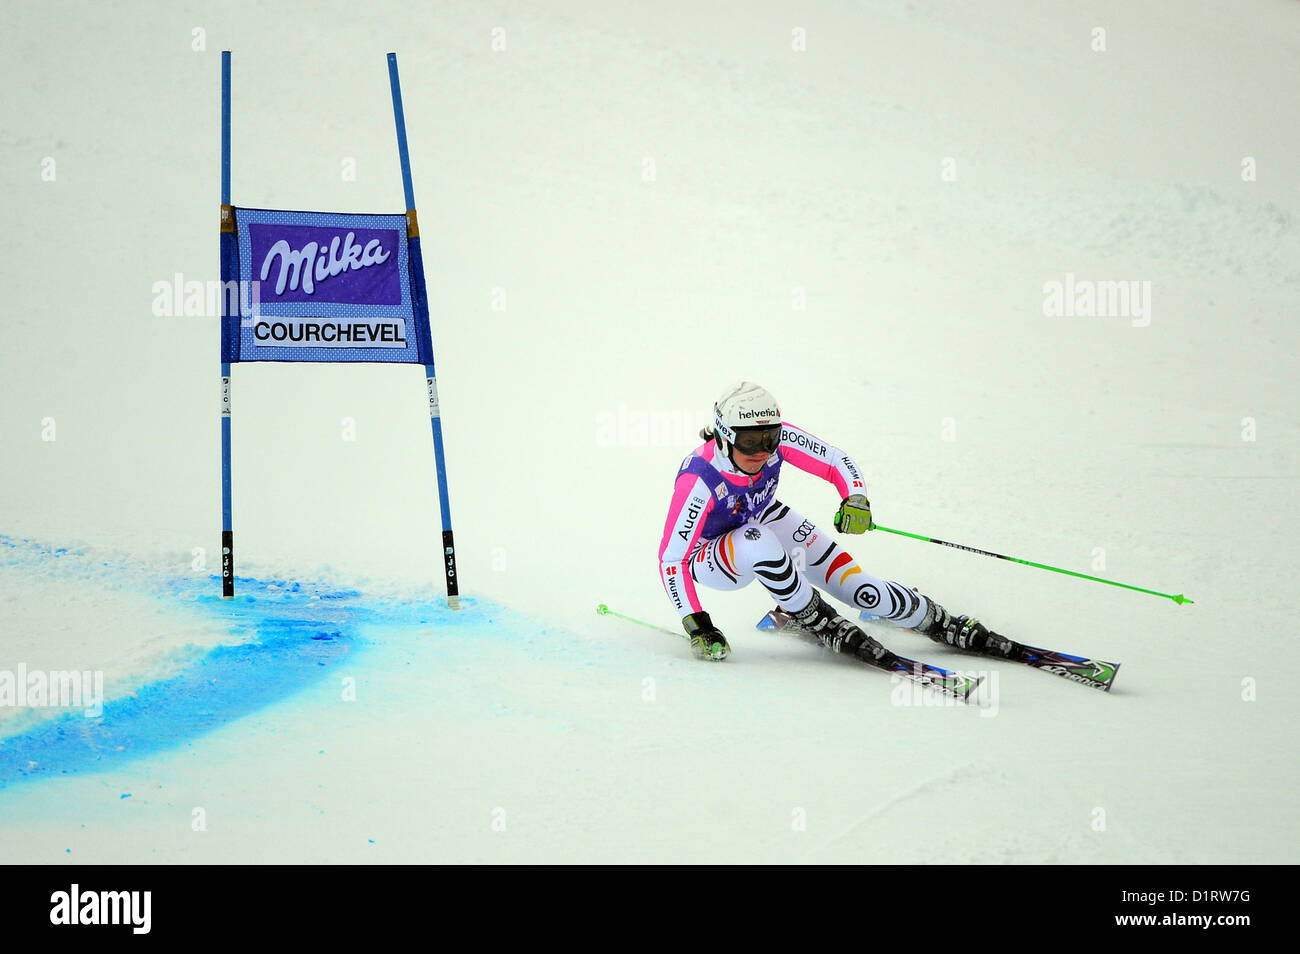 Audi FIS World Cup, Ladies Giant Slalom, Courchevel, France, 16.12.12. German skier Viktoria Rebensburg. Stock Photo